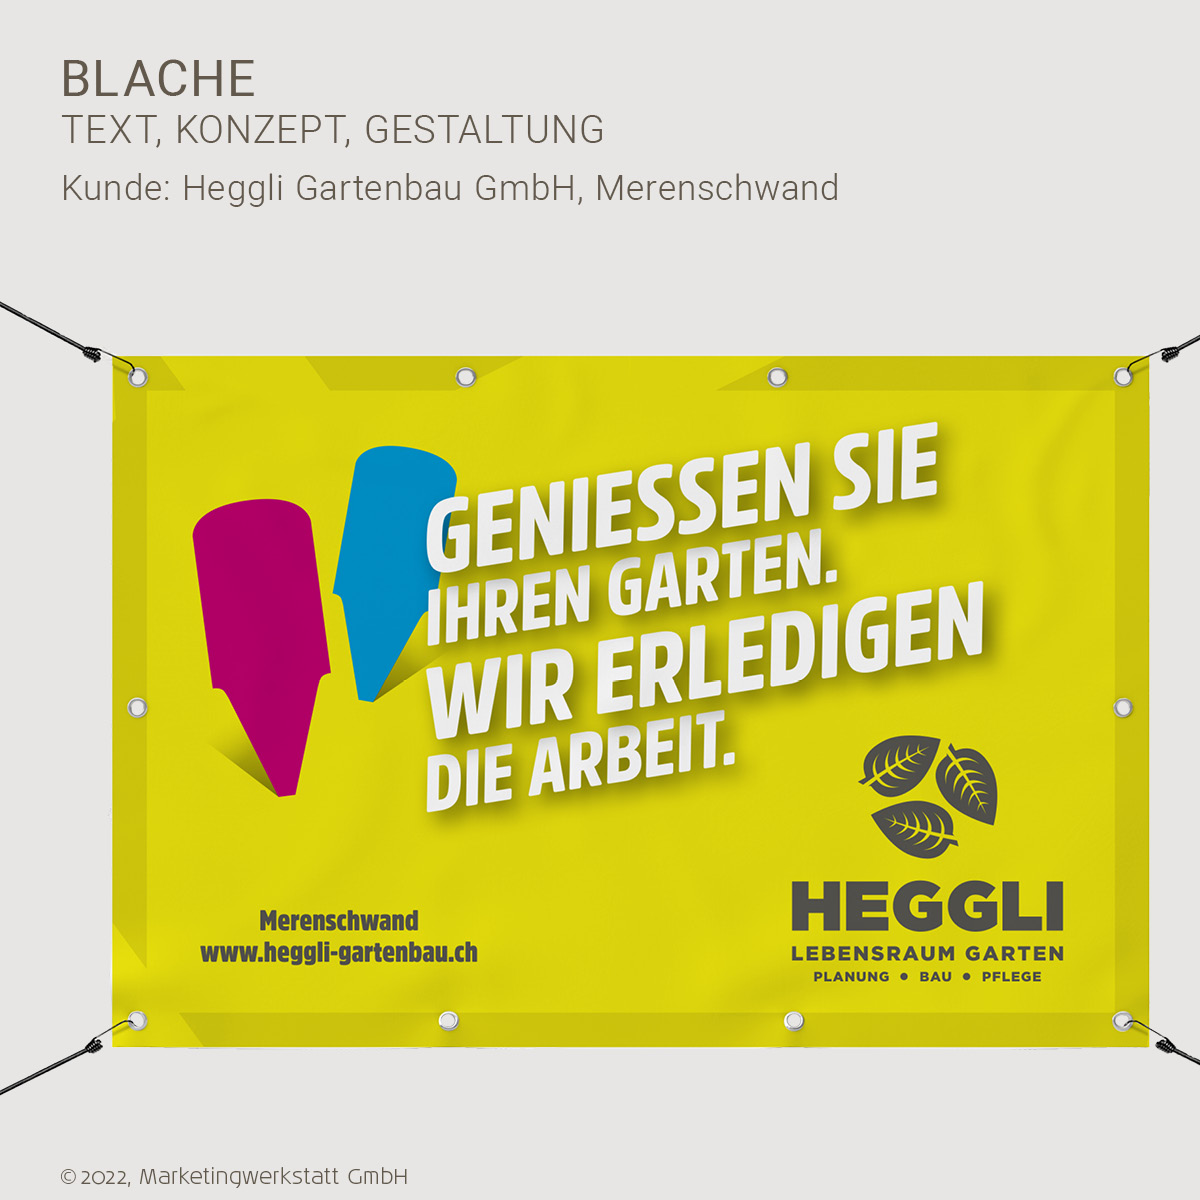 Marketingwerkstatt_Blache_Heggli-Gartenbau_11-2022